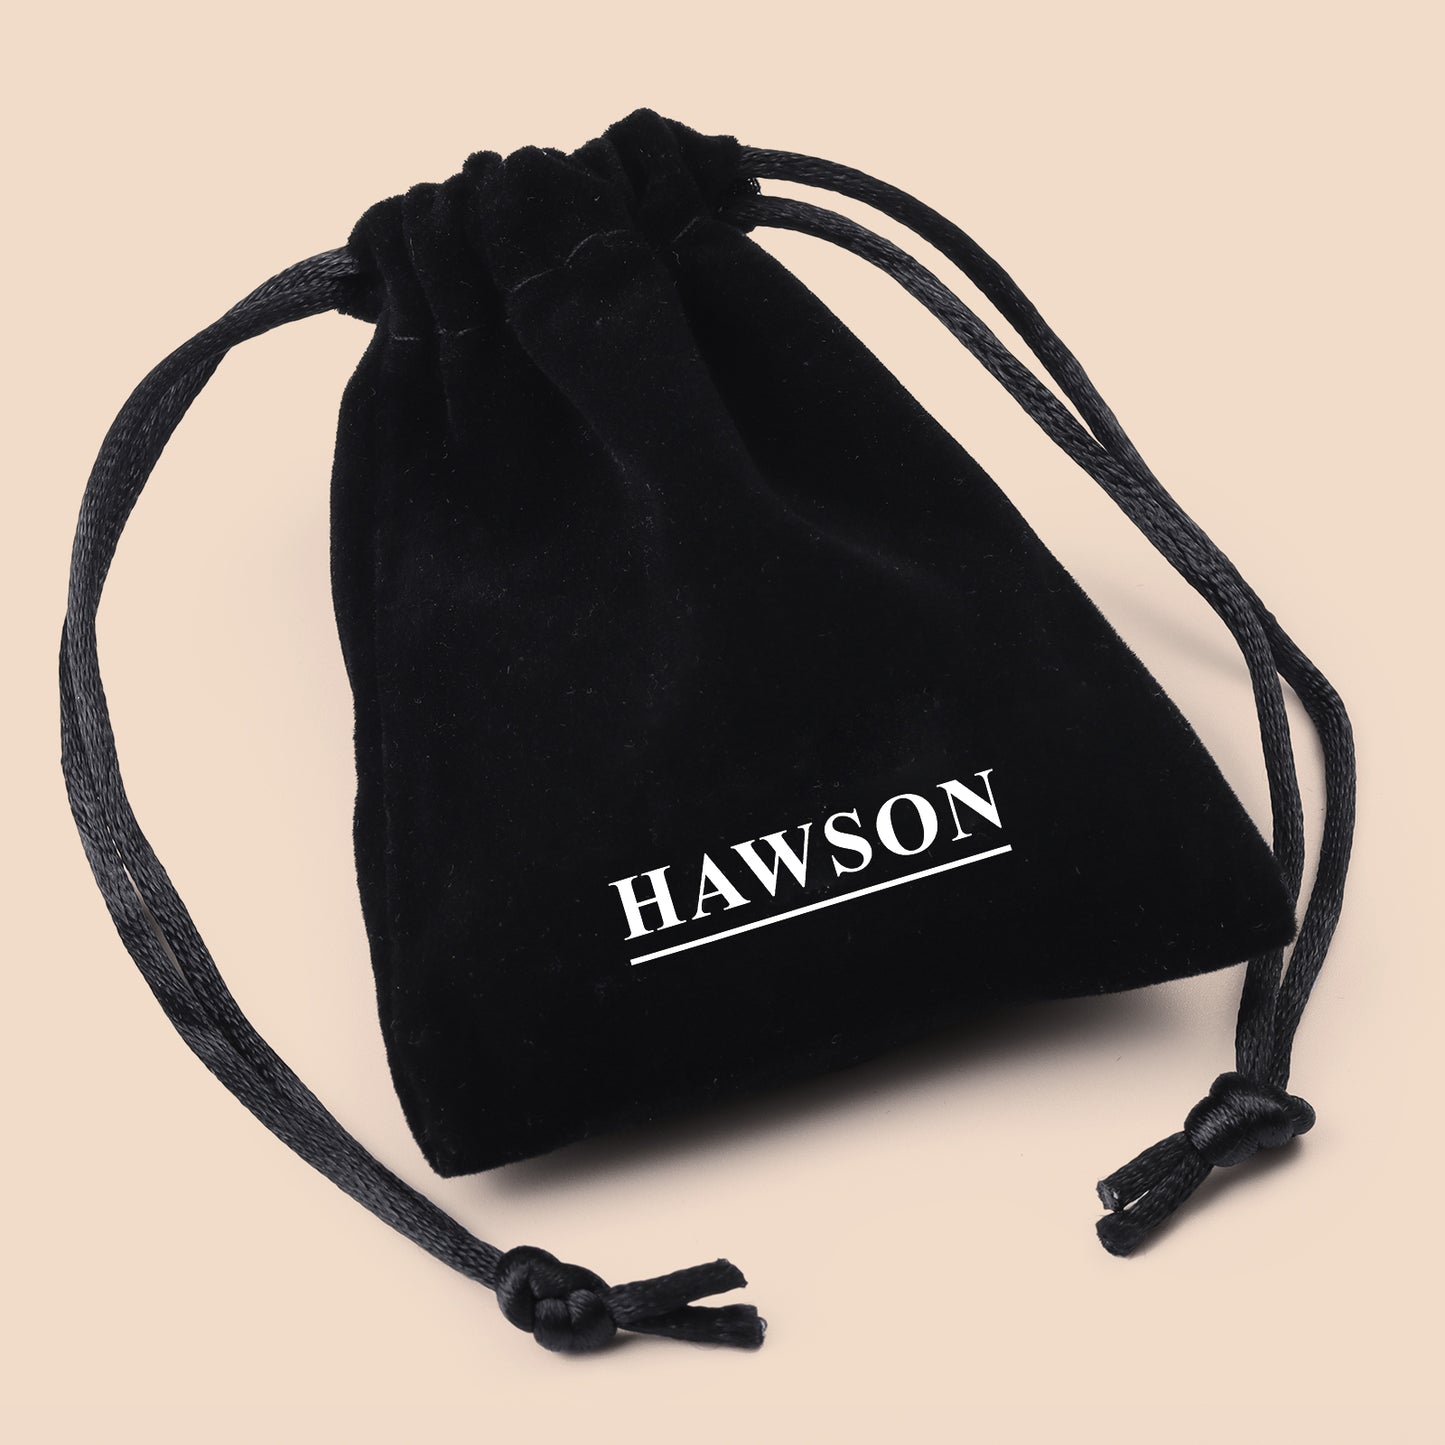 HAWSON Siver Tone Initial Cufflinks for Men